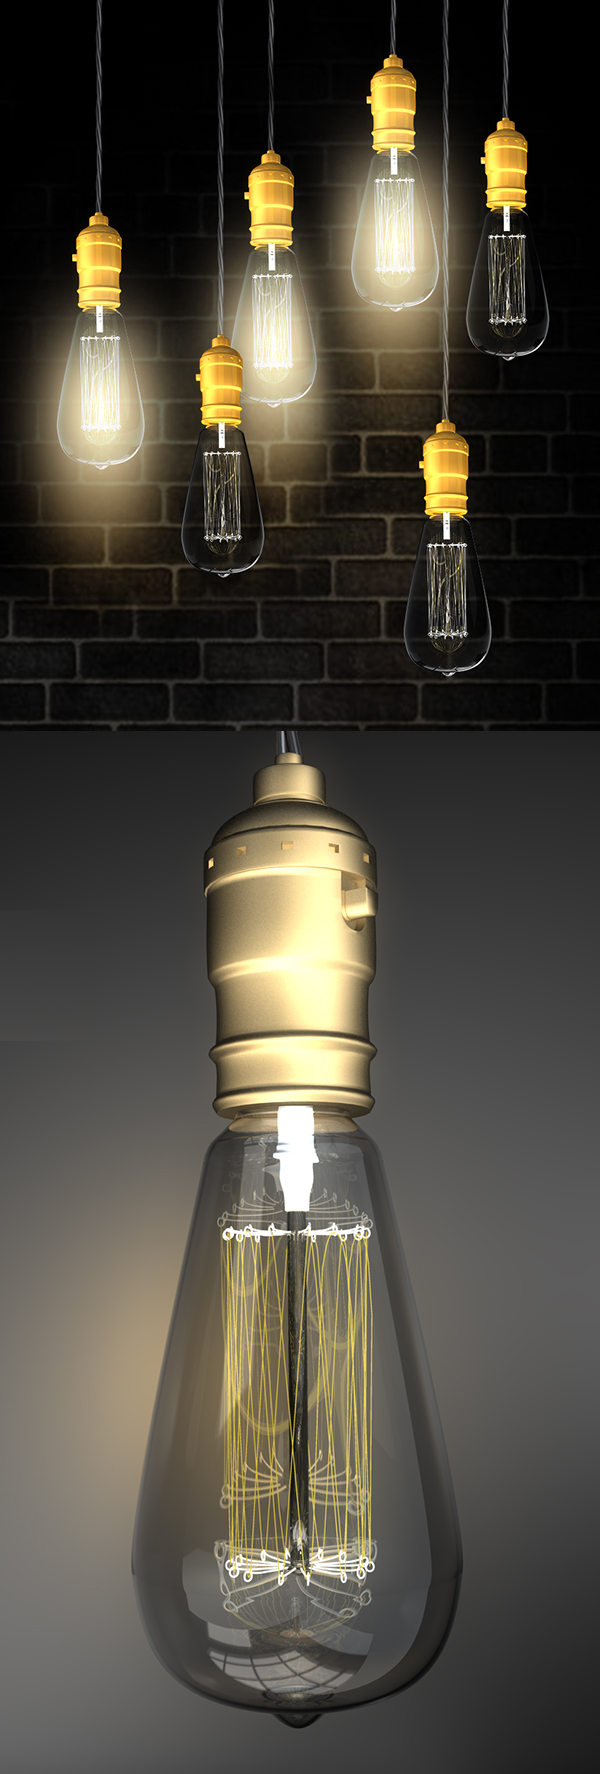 Free Bulb Lights PSD Mockup Templates